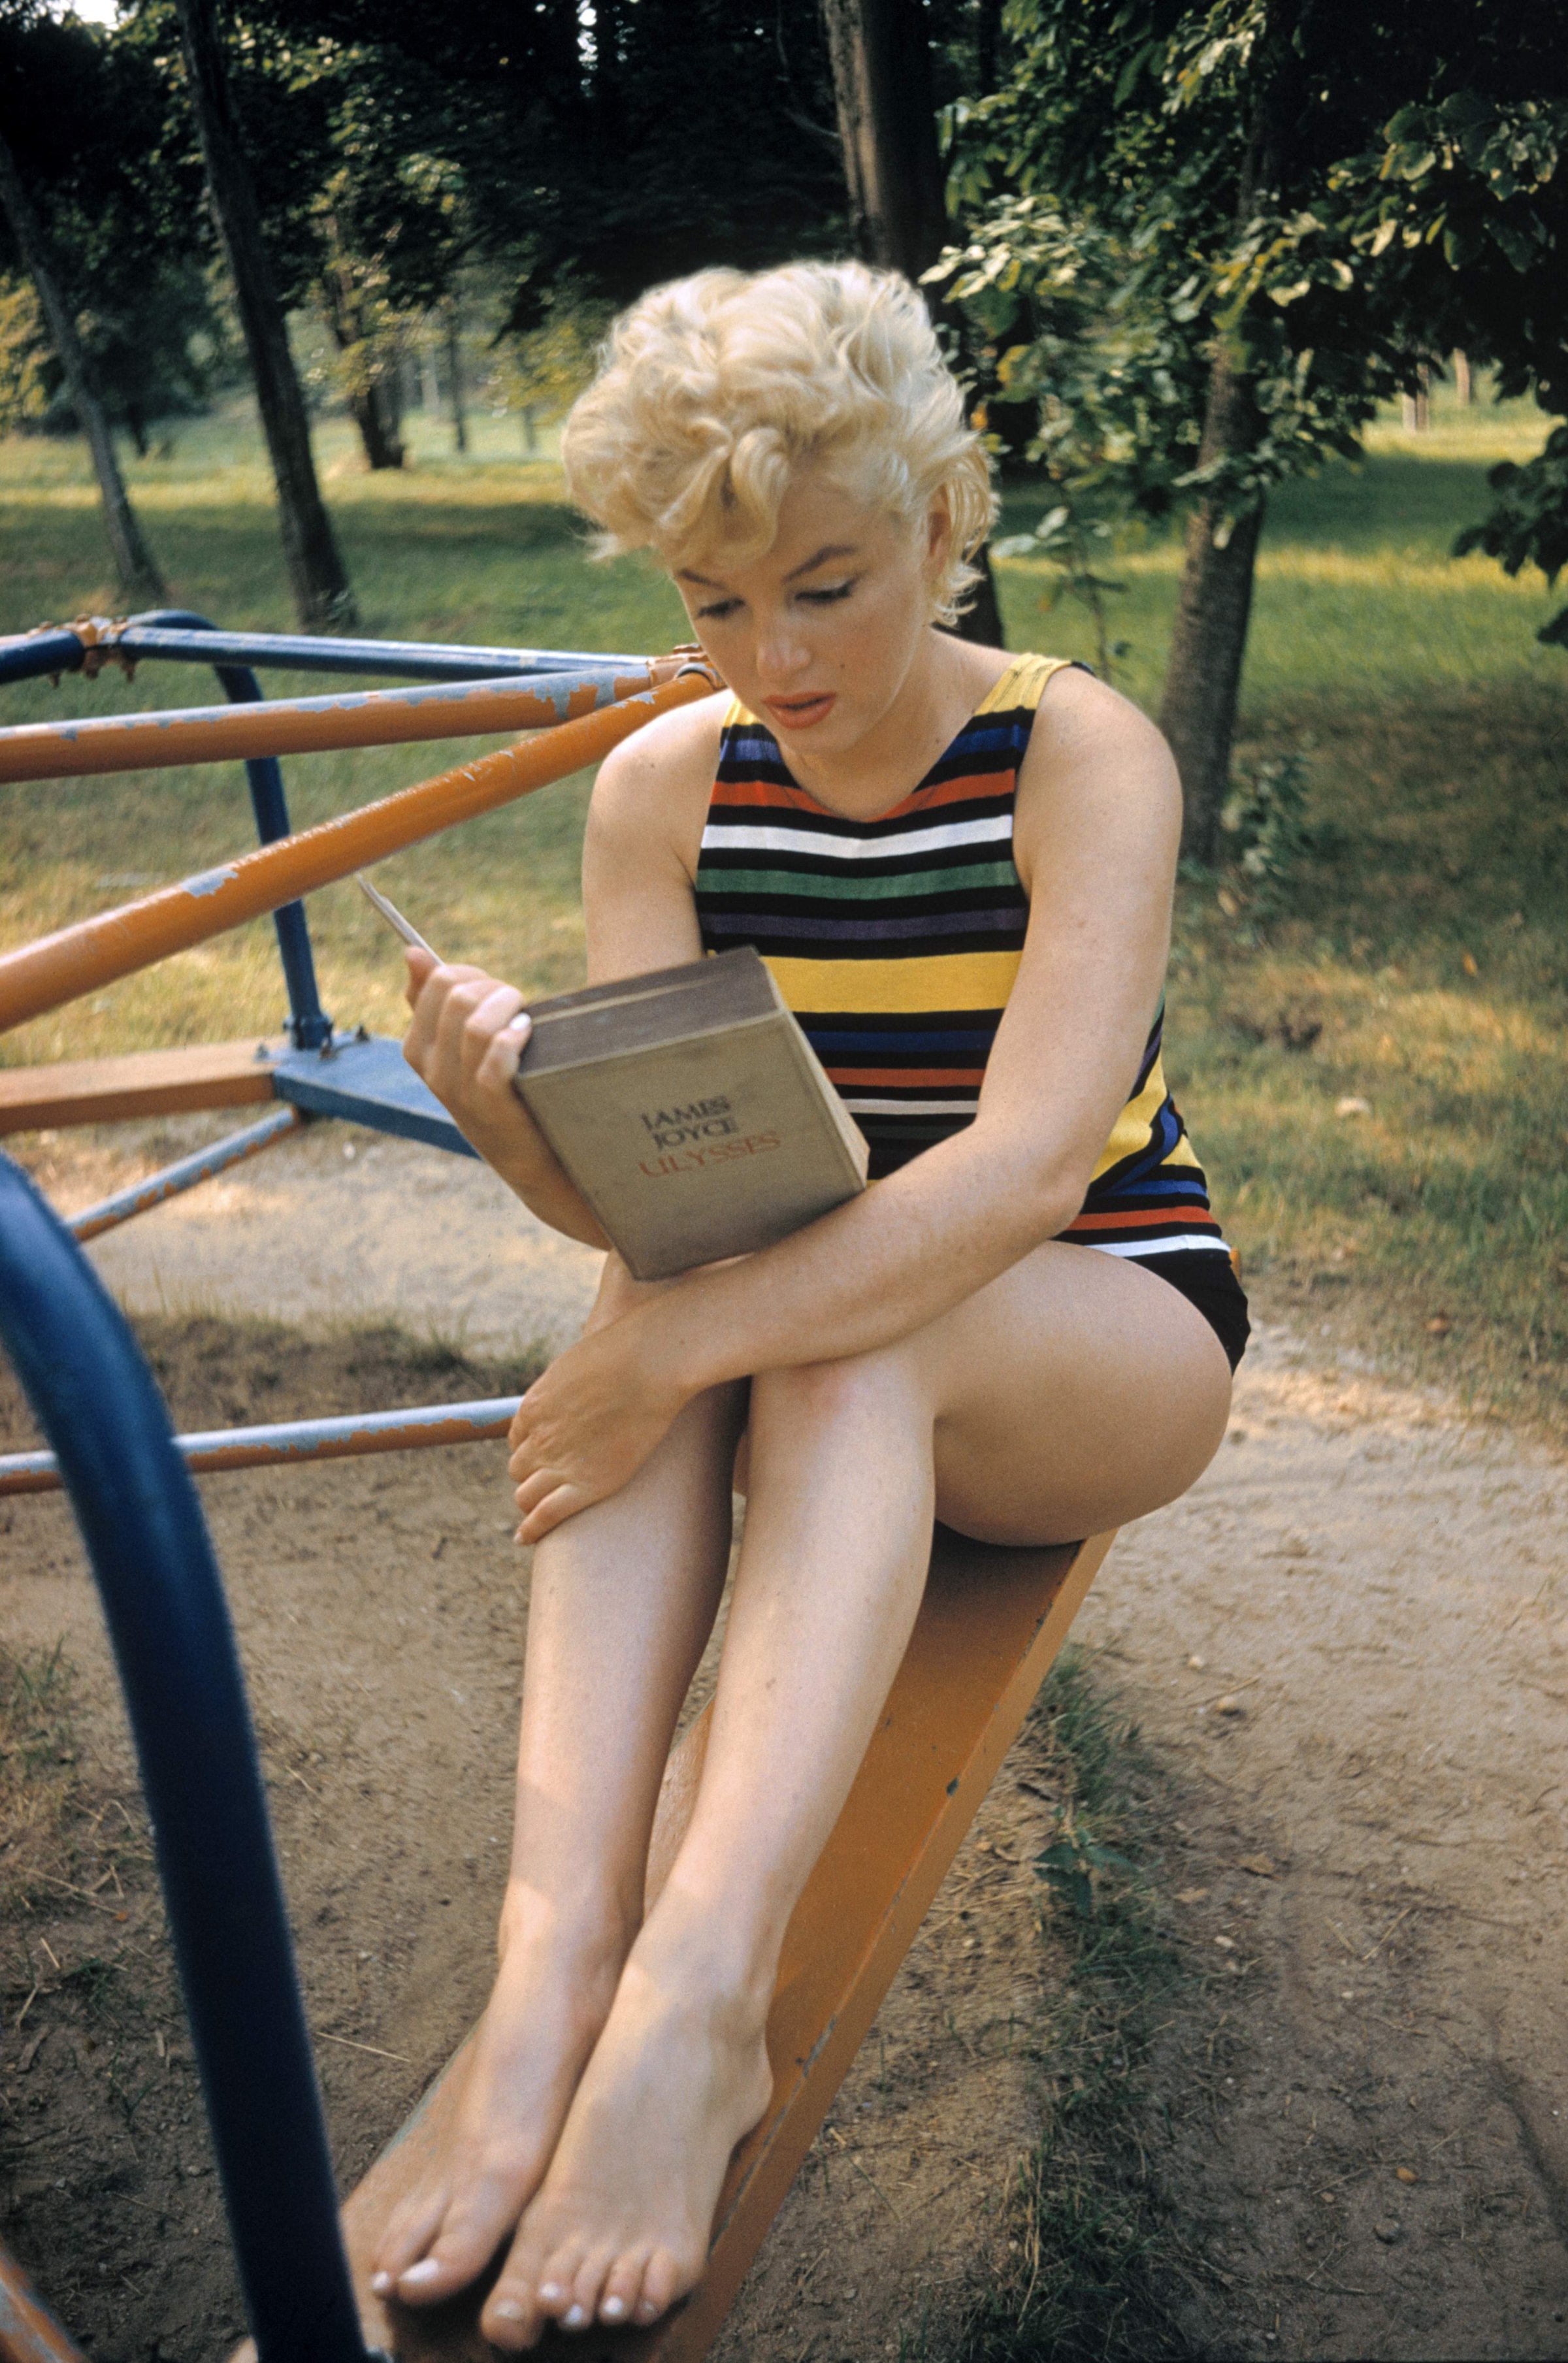 USA. New York. Long Island. US actress Marilyn MONROE. 1955.